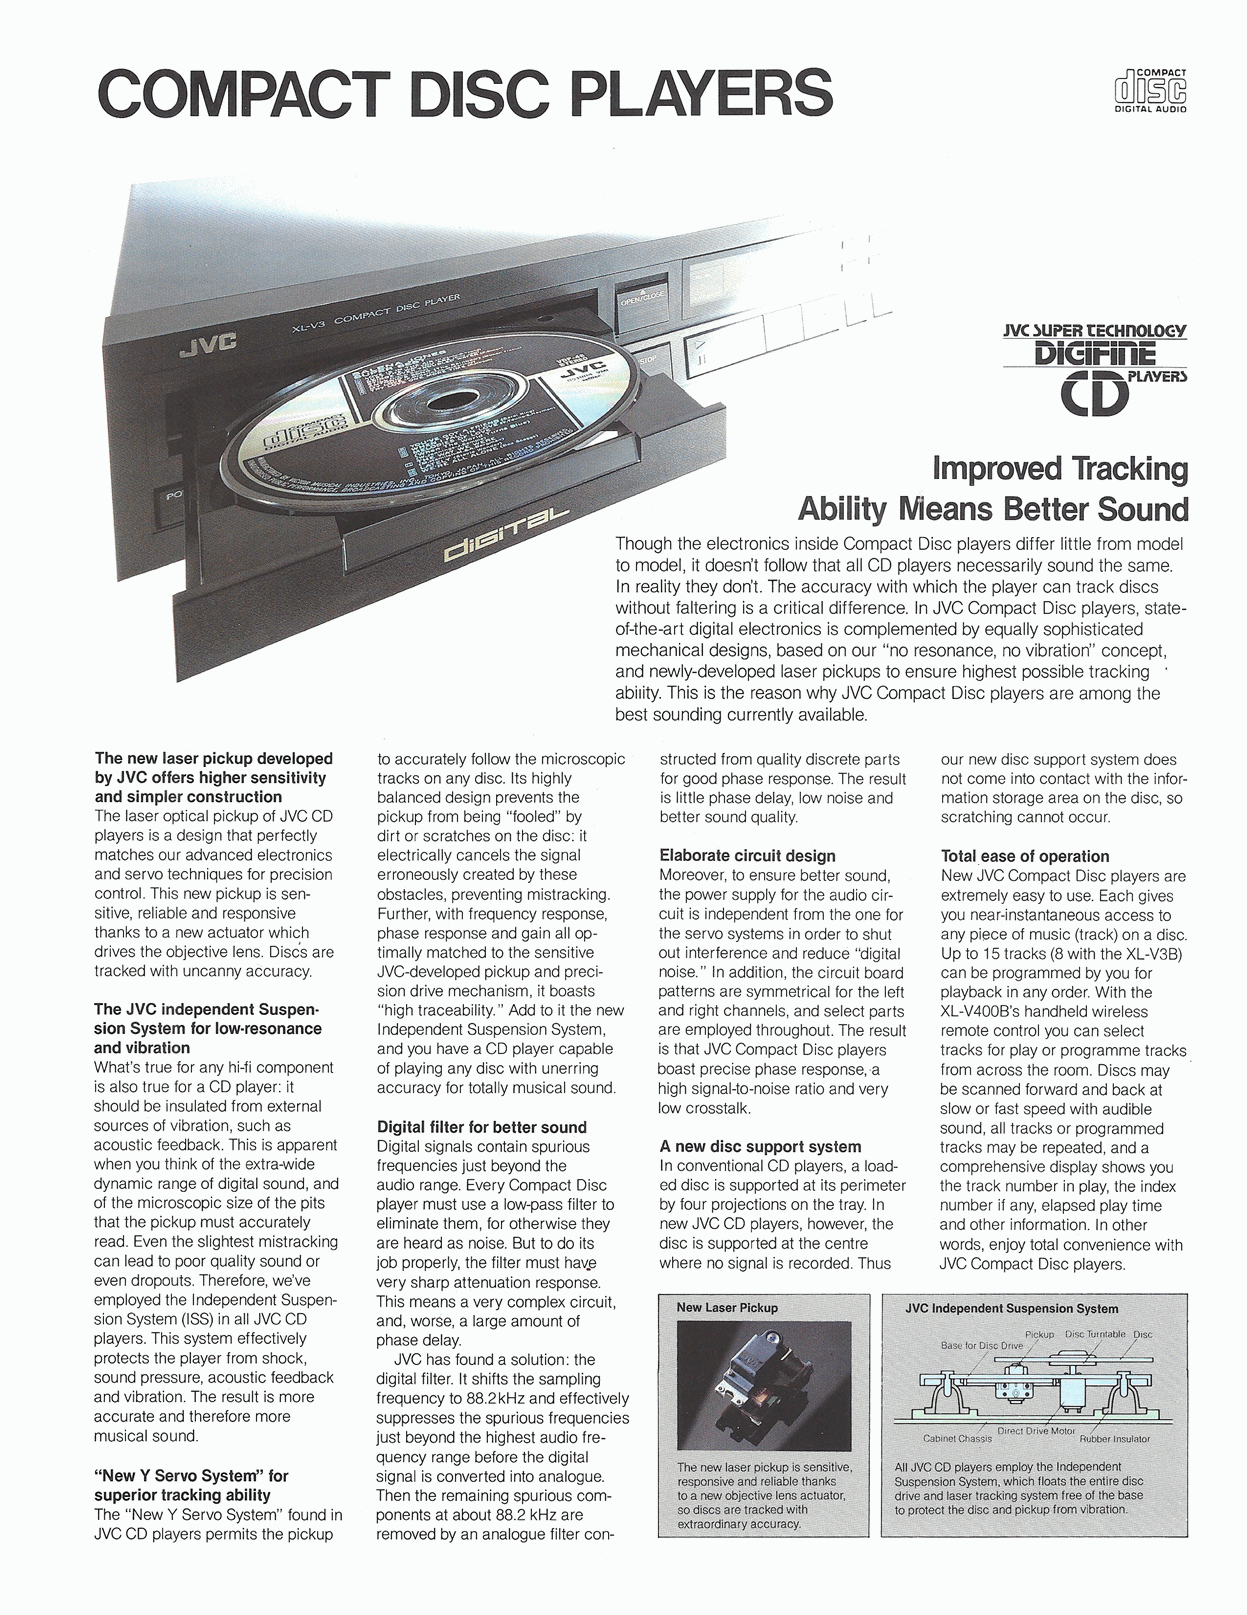 JVC CD Player Technology of 1978